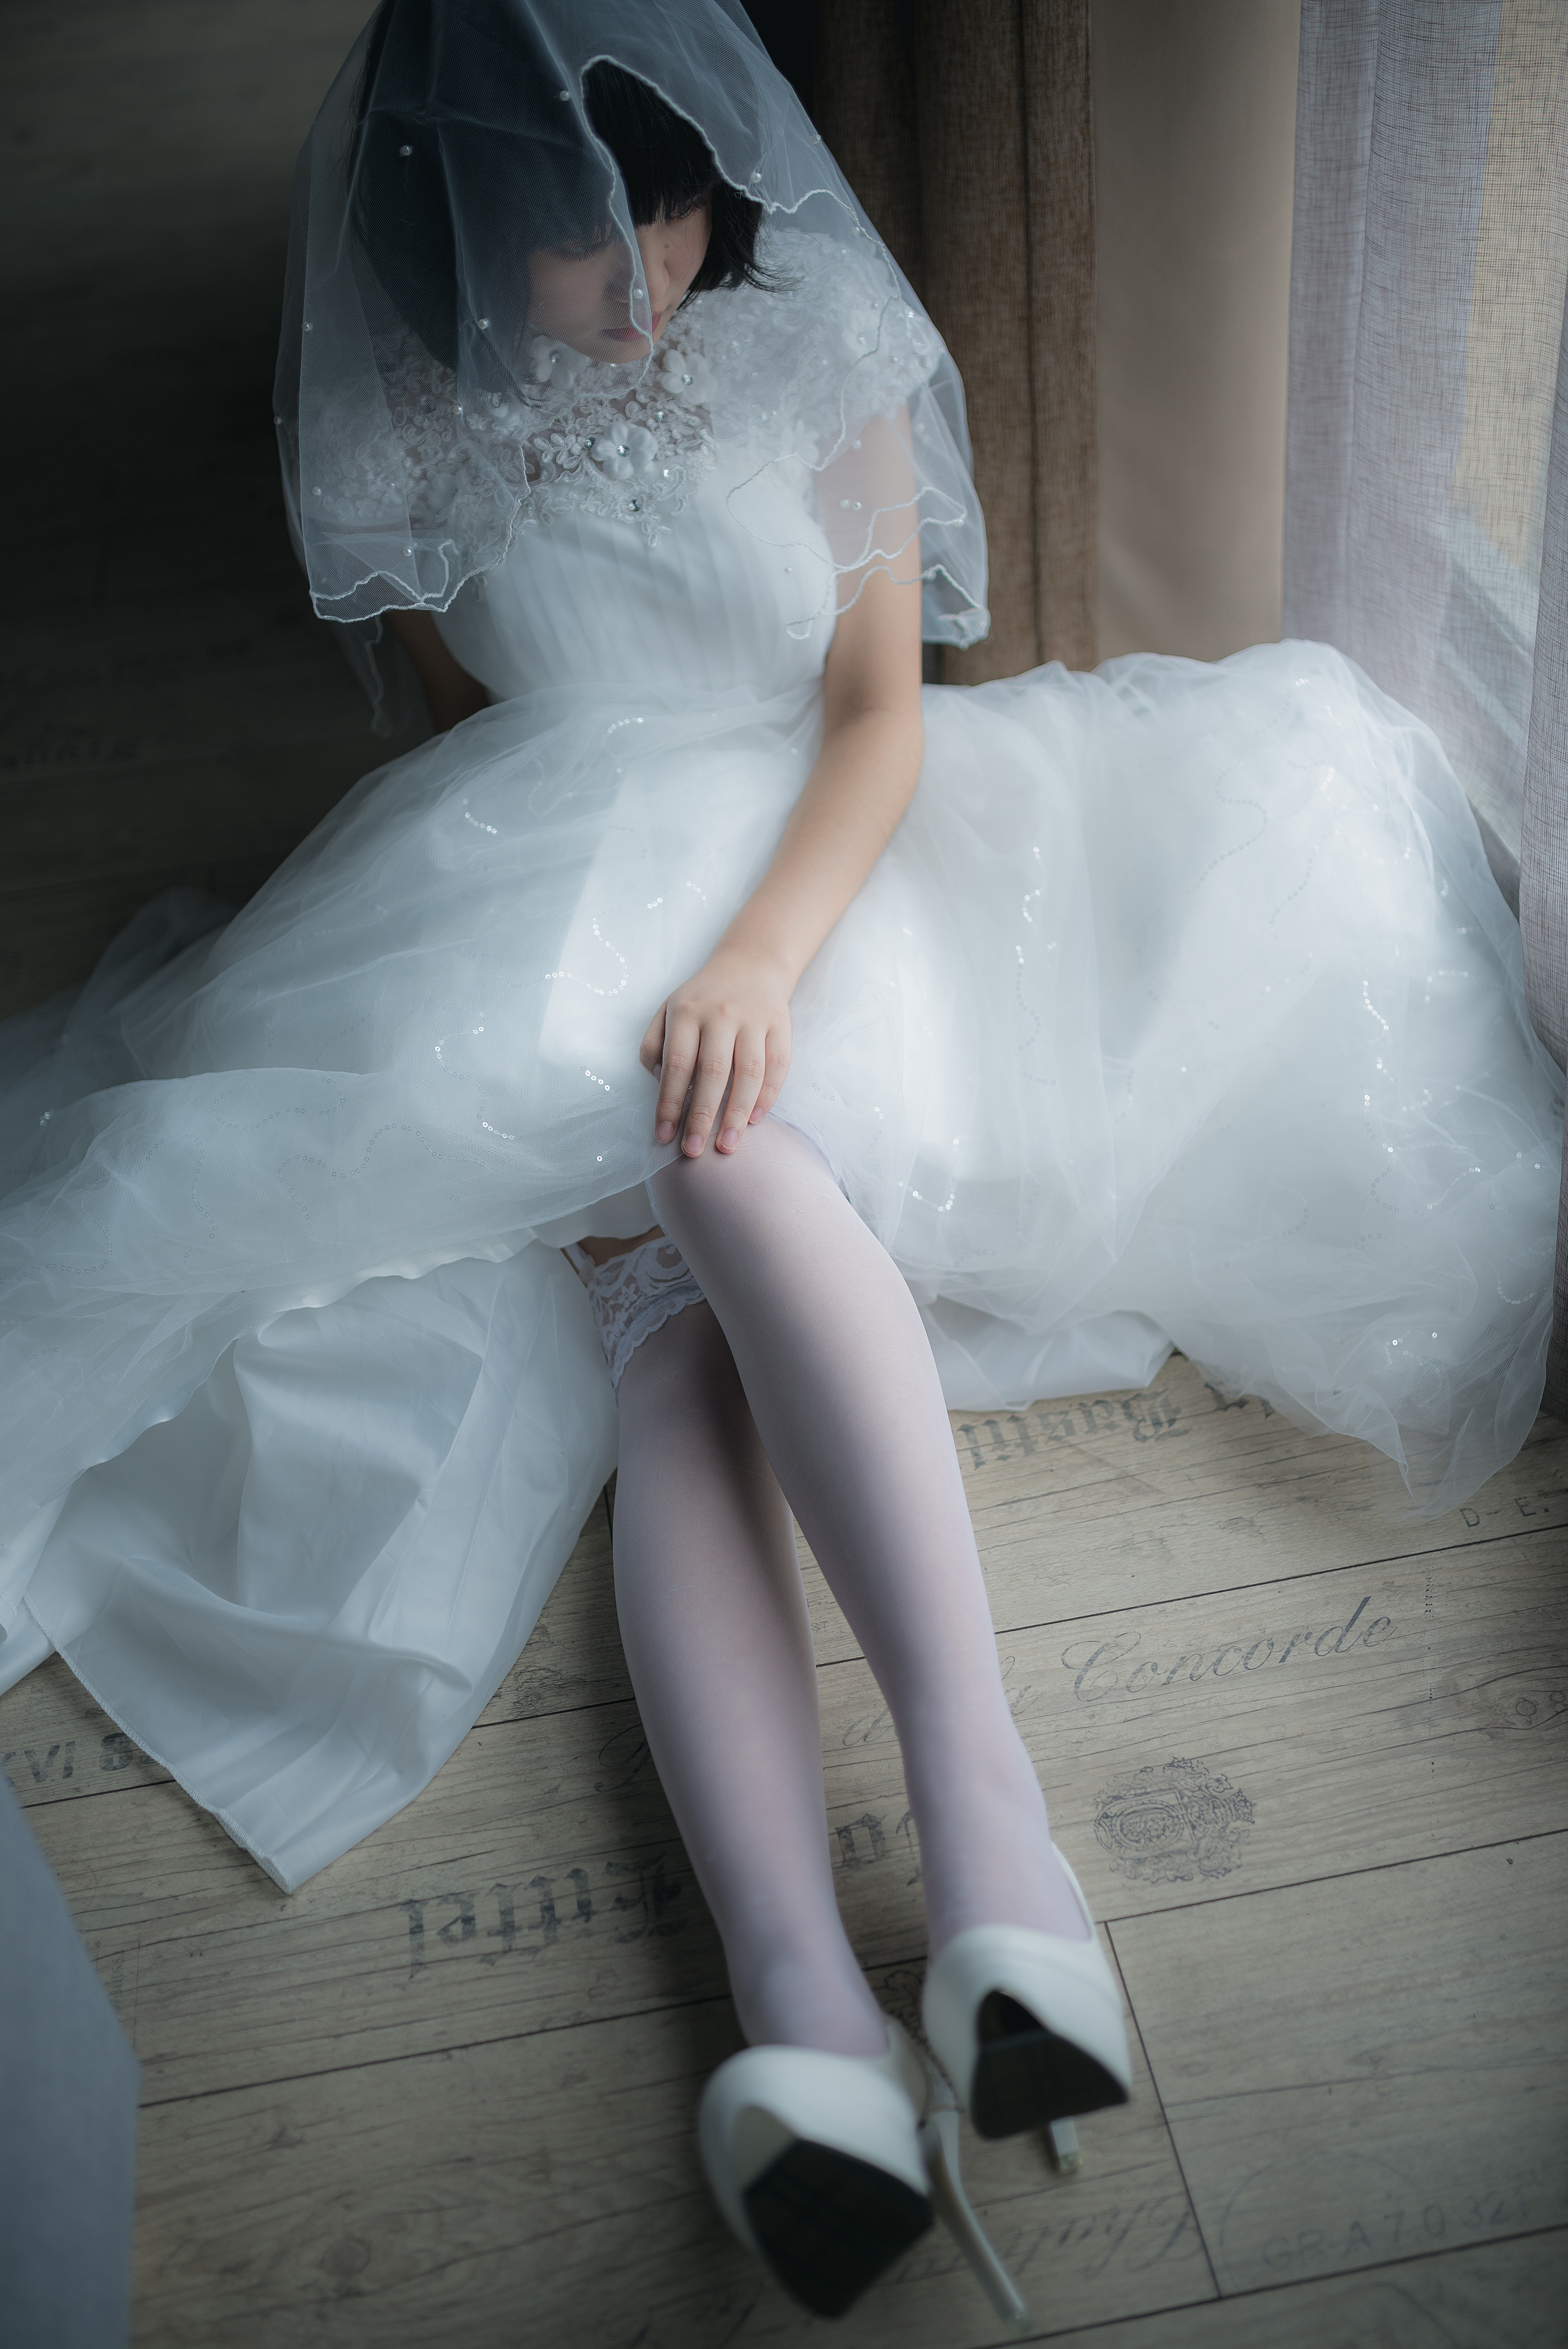 People 4016x6016 Asian dark hair women sitting on the floor brides wedding dress women indoors heels white stockings